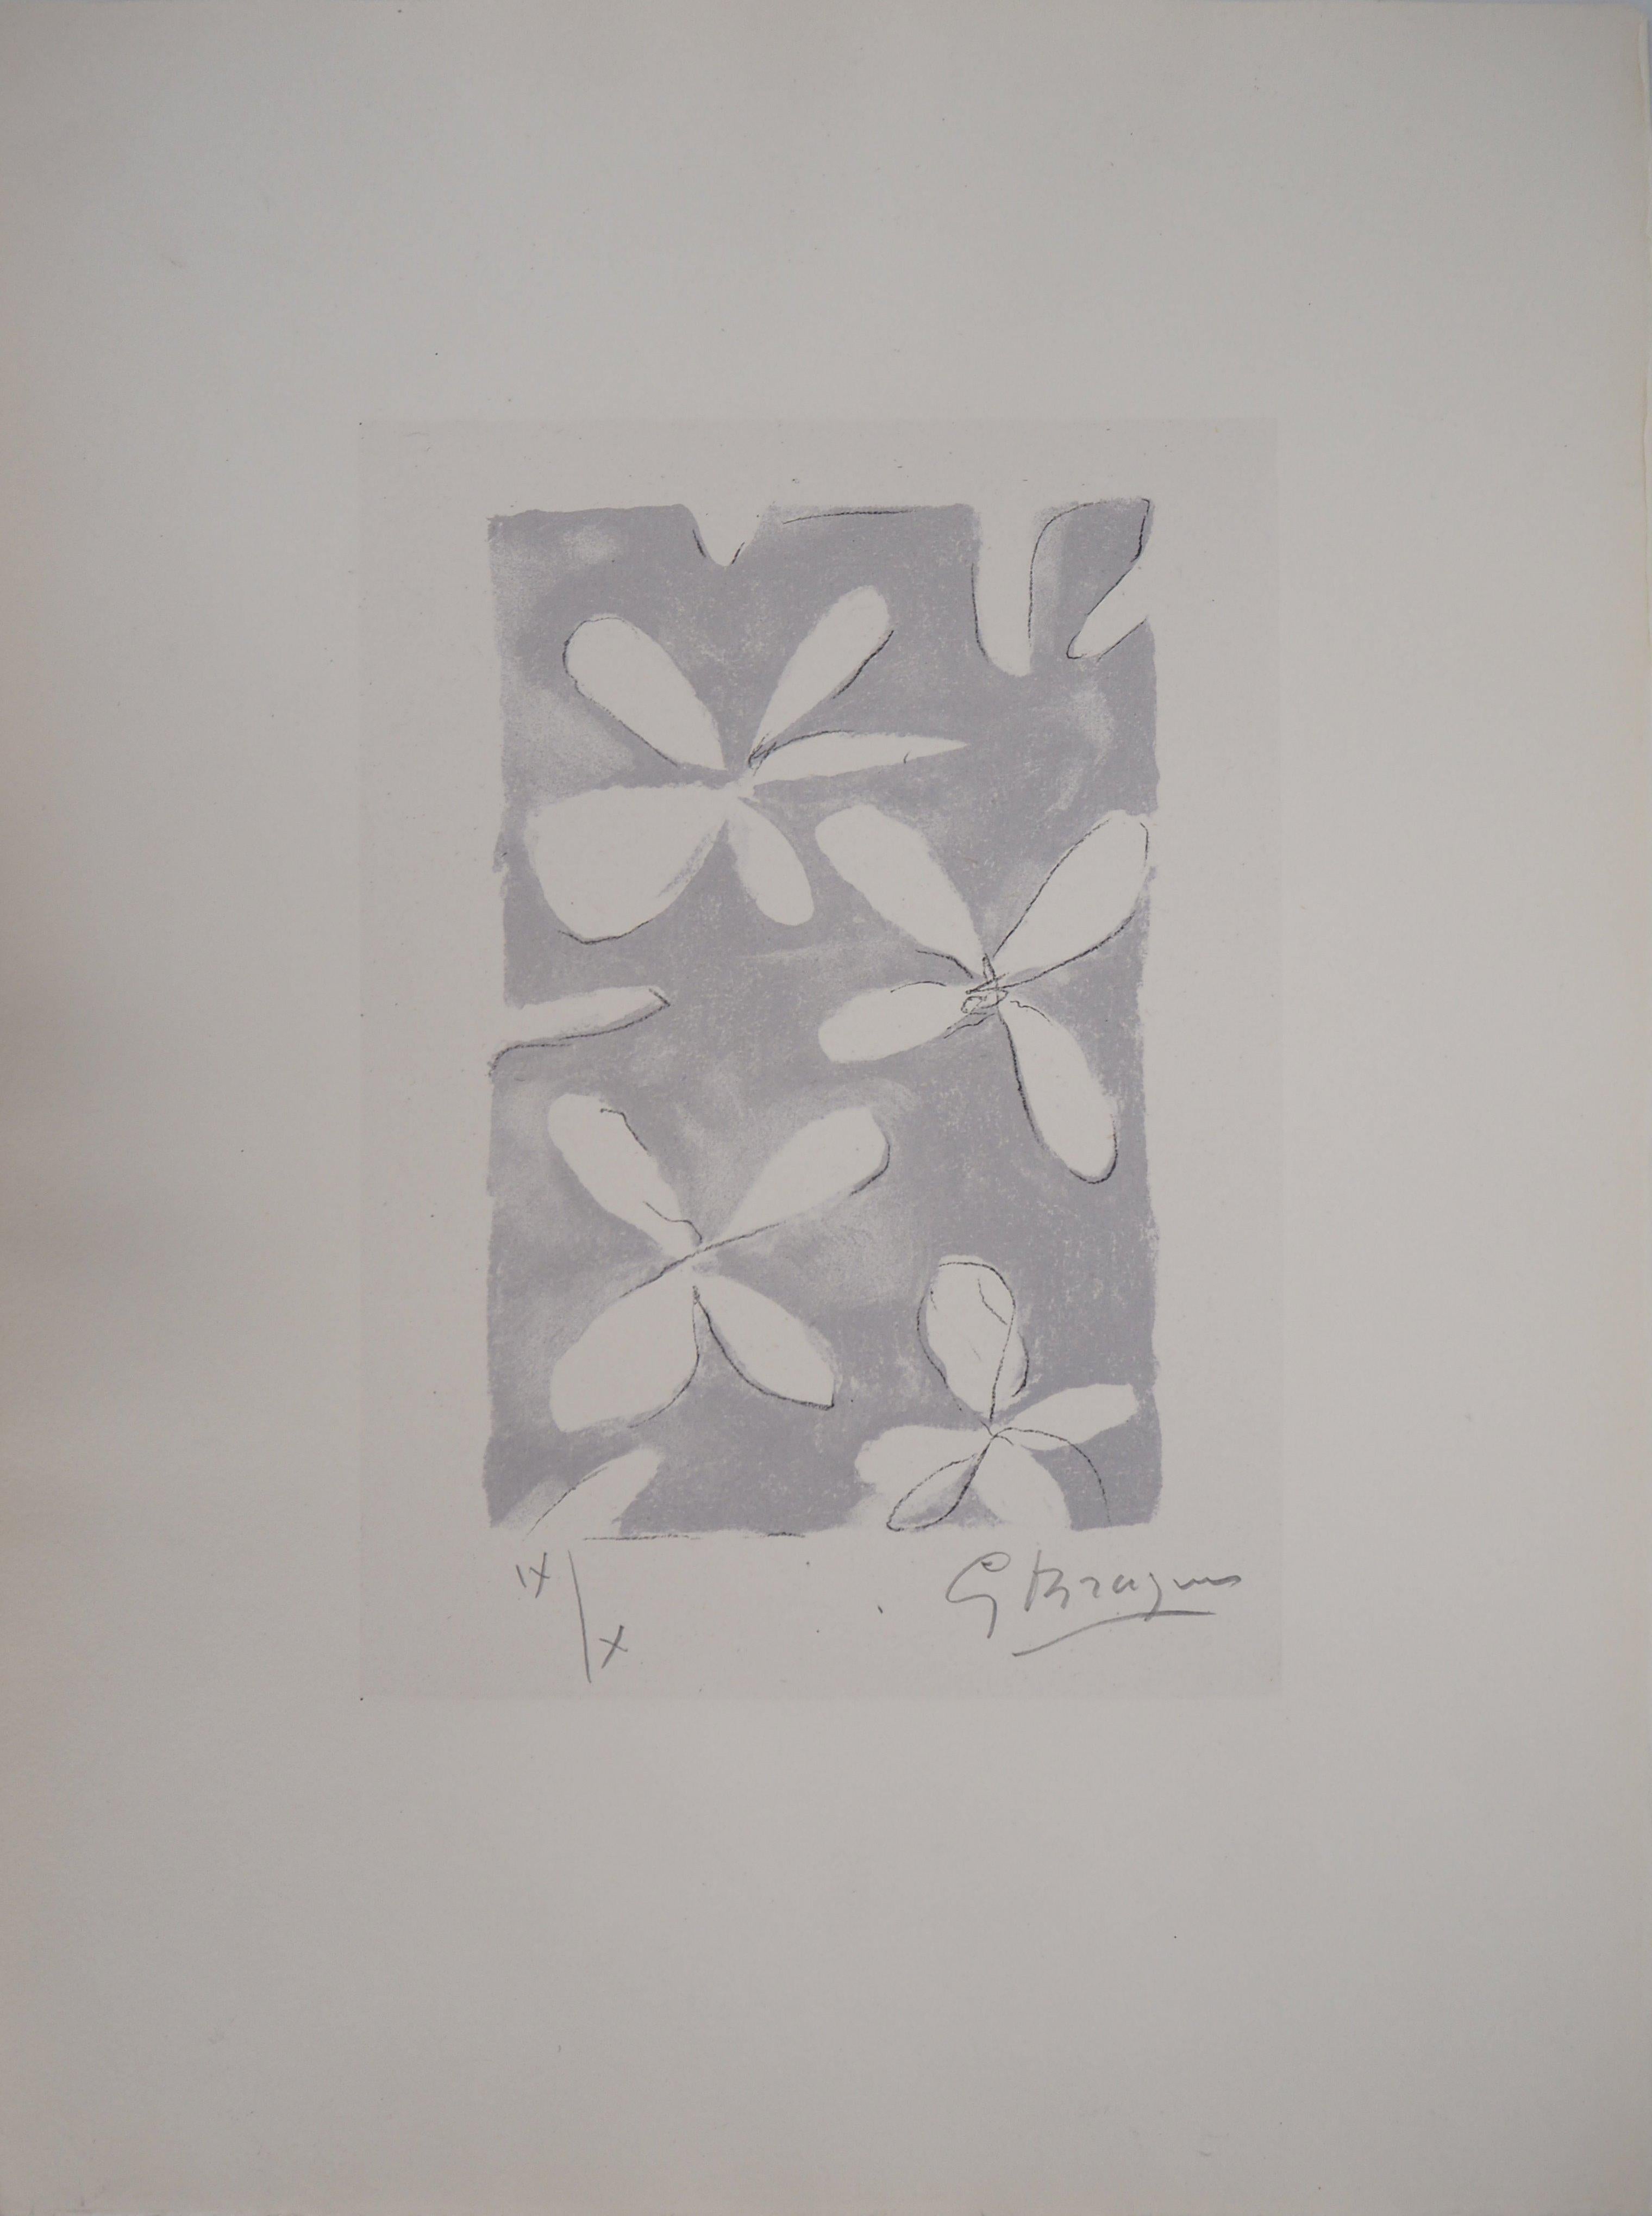 Georges Braque Animal Print - Flower Pattern - Original lithograph, Handsigned, Ltd / 10 - Mourlot #88